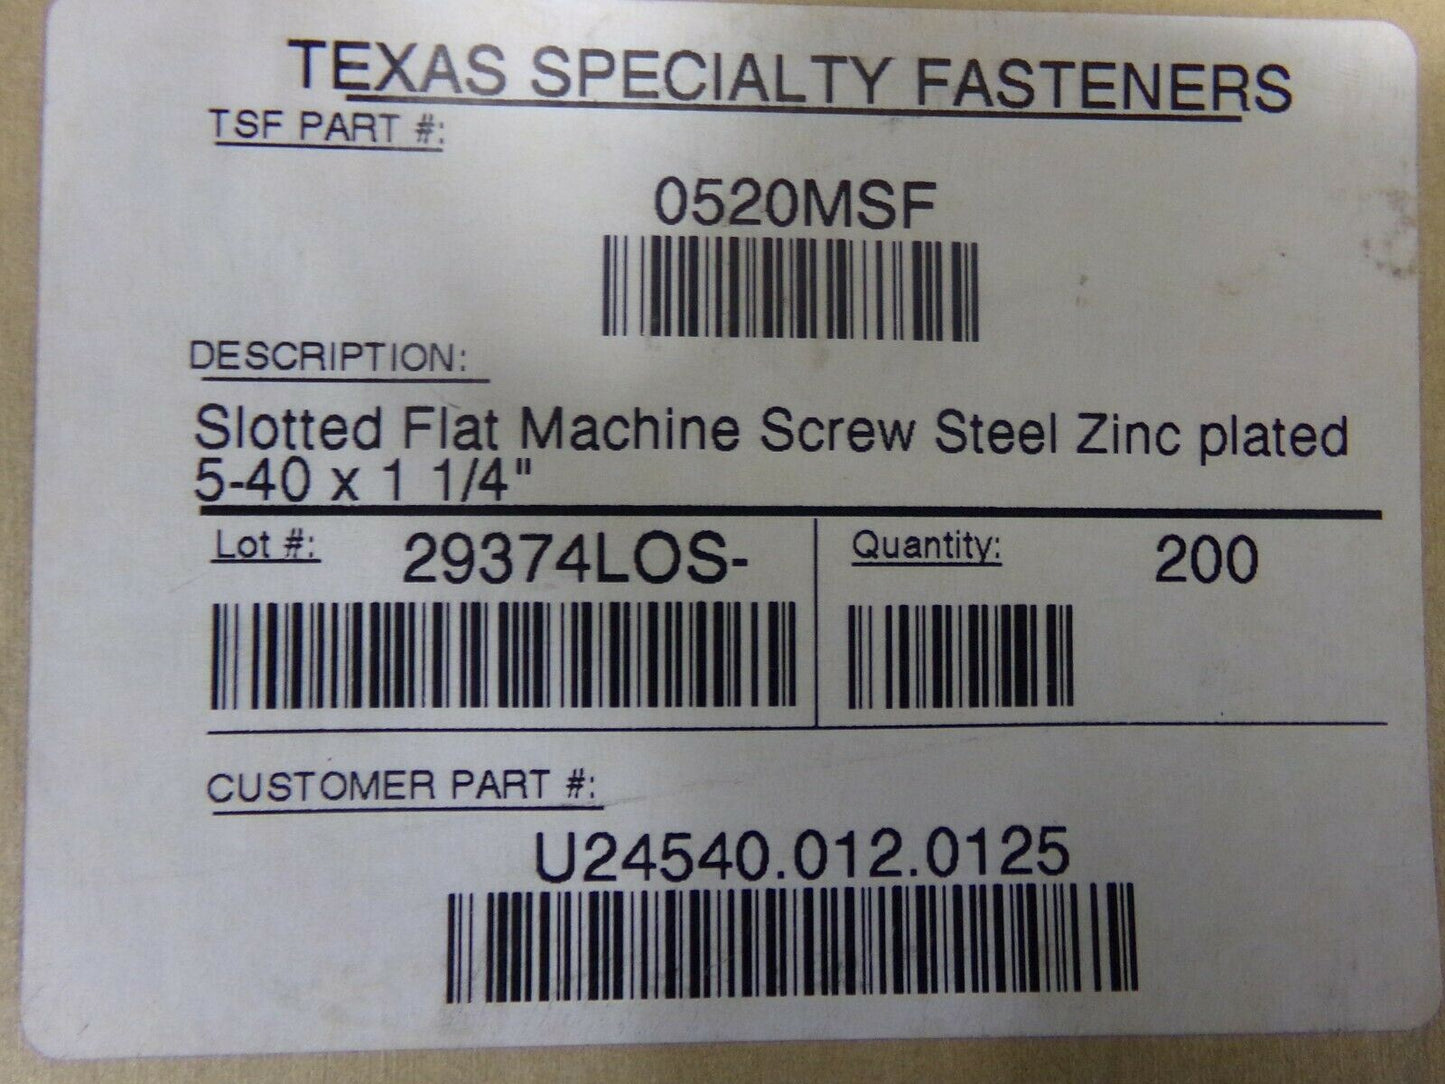 200 slotted flat machine screw steel zinc plated M5-0.40 x 1-1/4" (183788982160-NBT04)